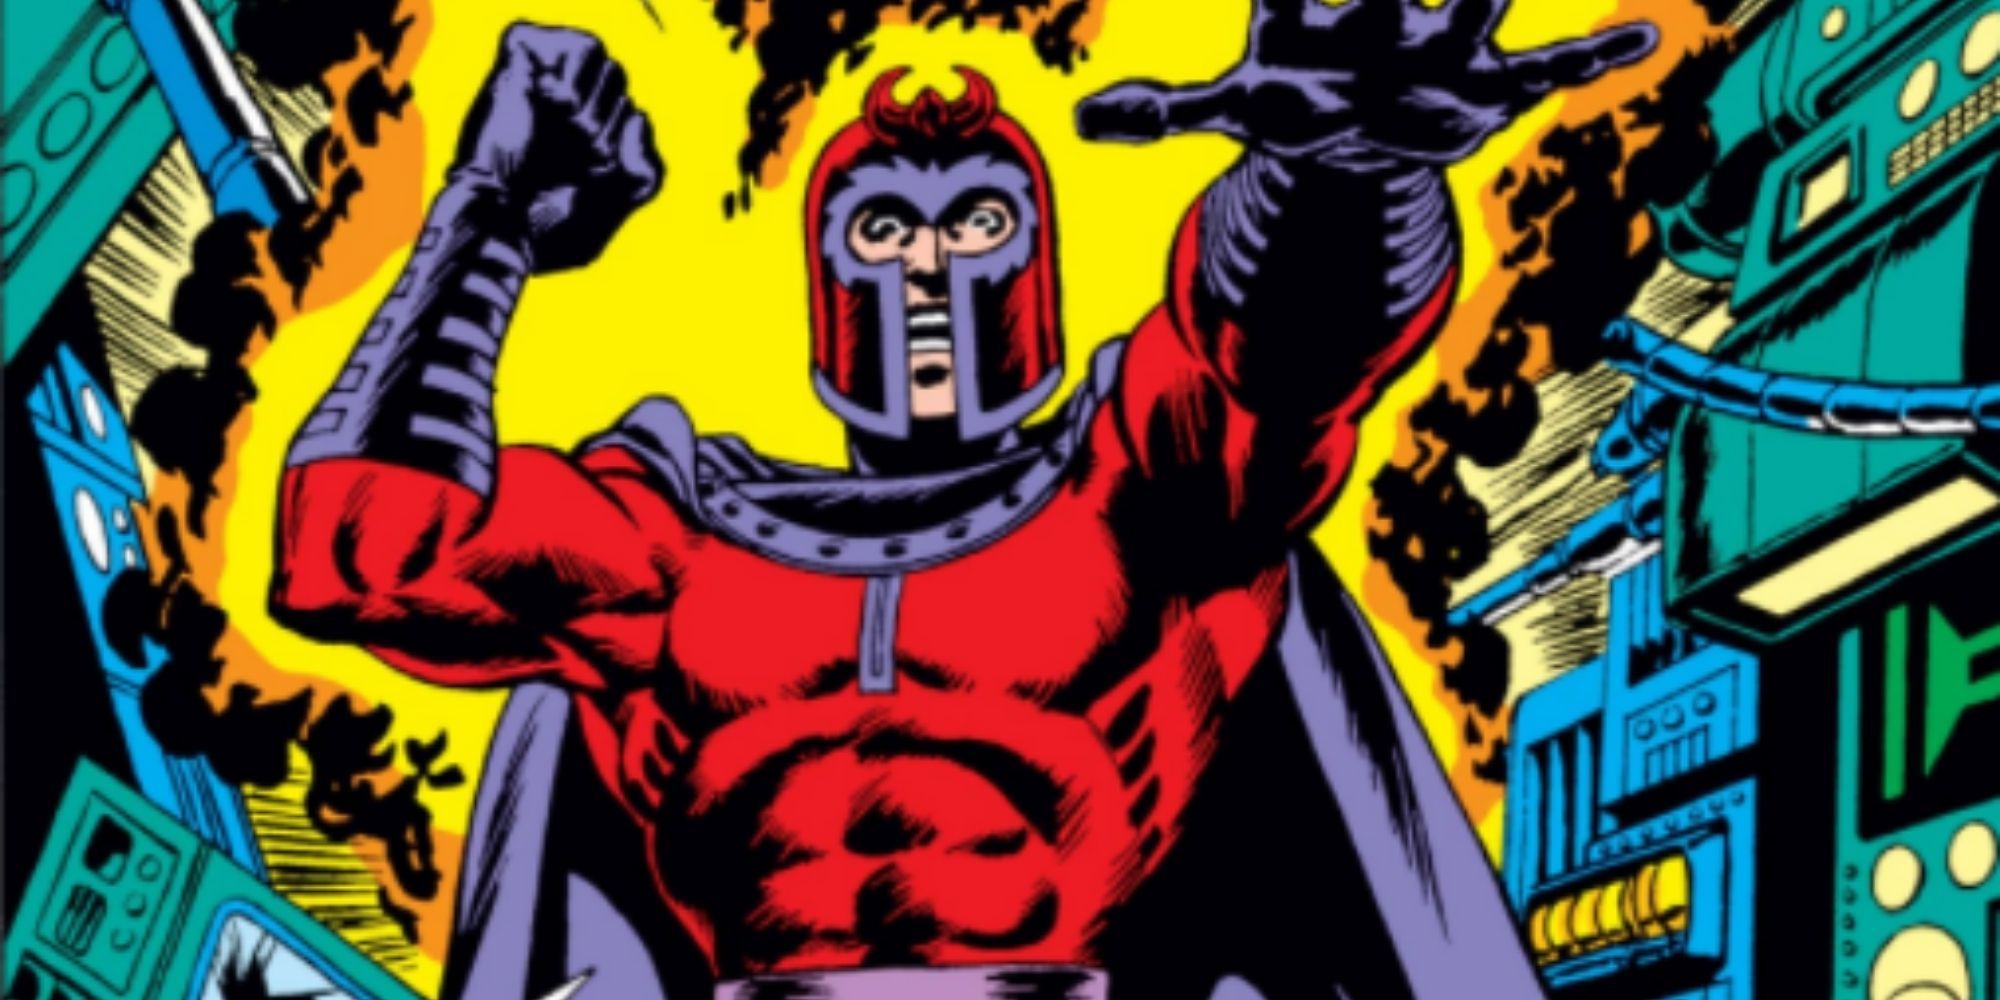 Magneto raising his arms while talking in X-Men comics